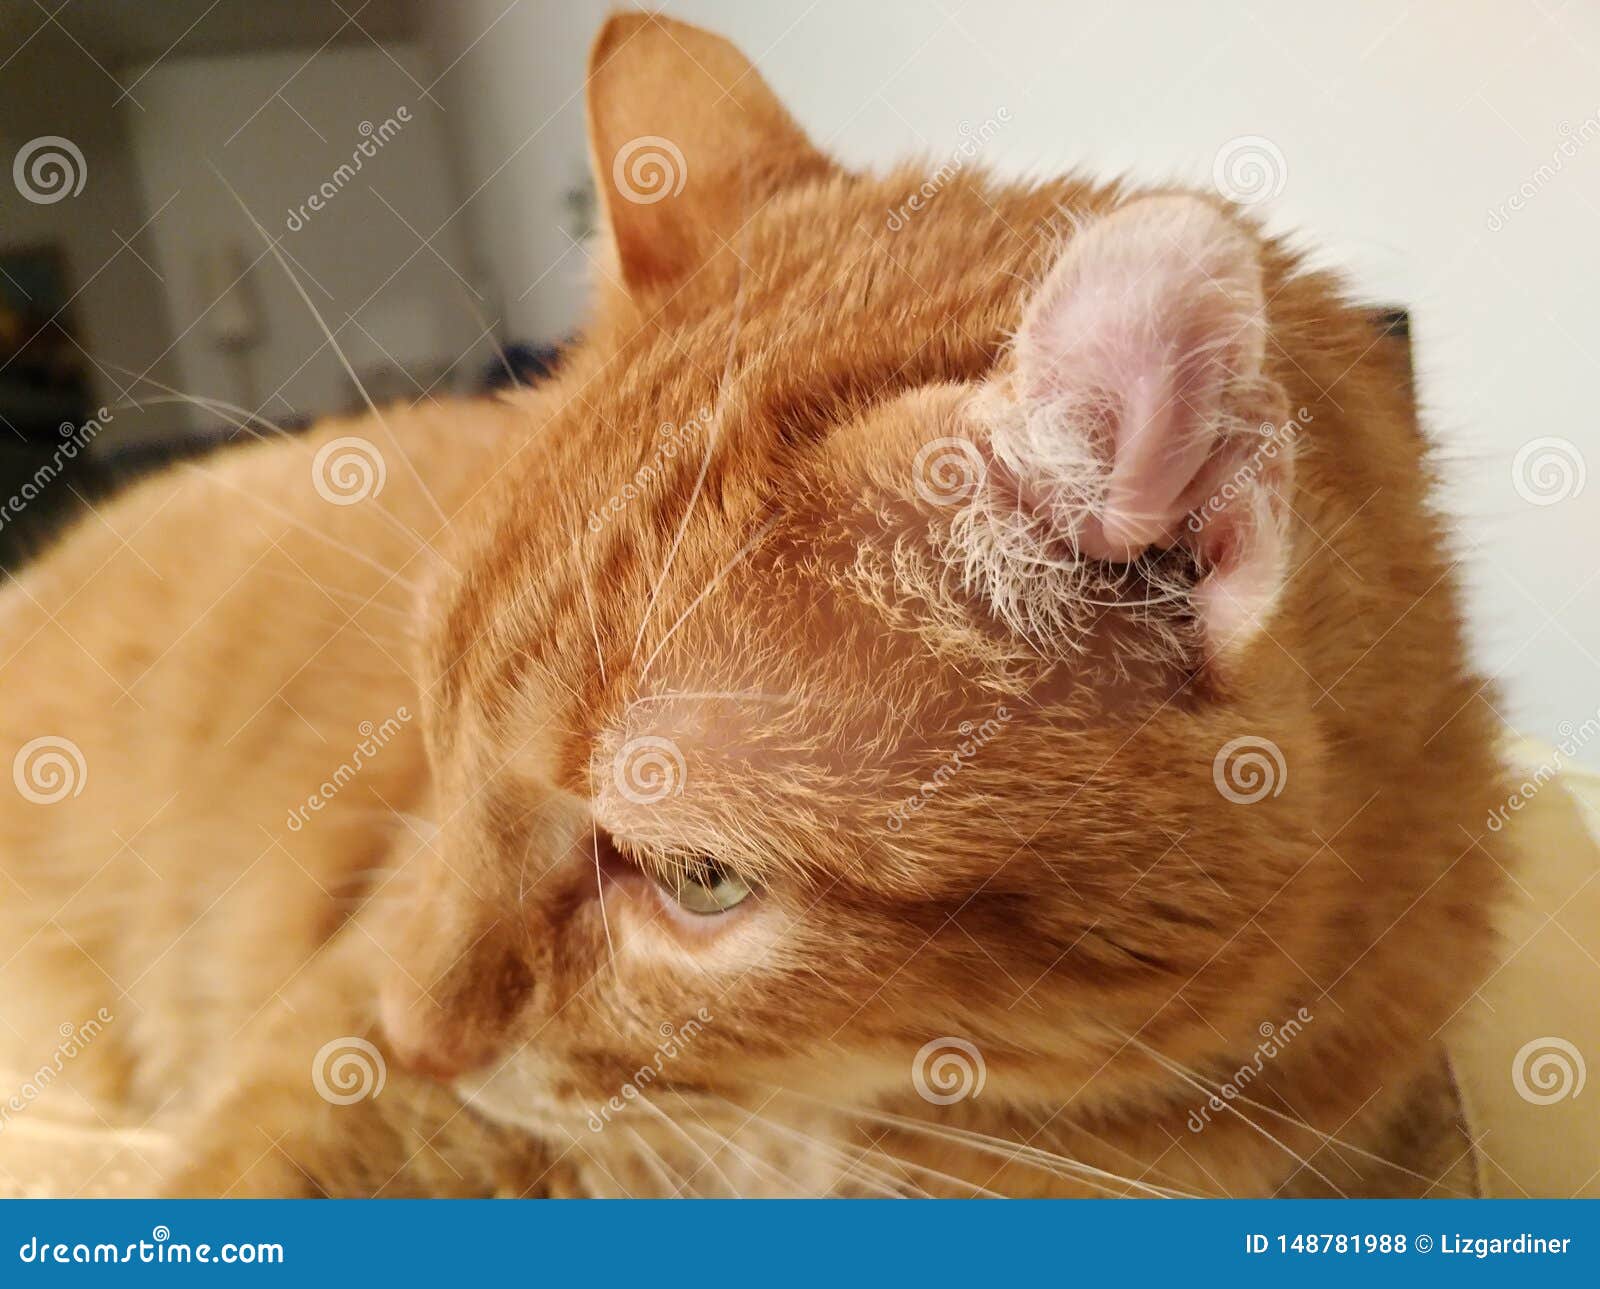 Feline Ear Hematoma On Mature Cat Stock Photo Image of scratching